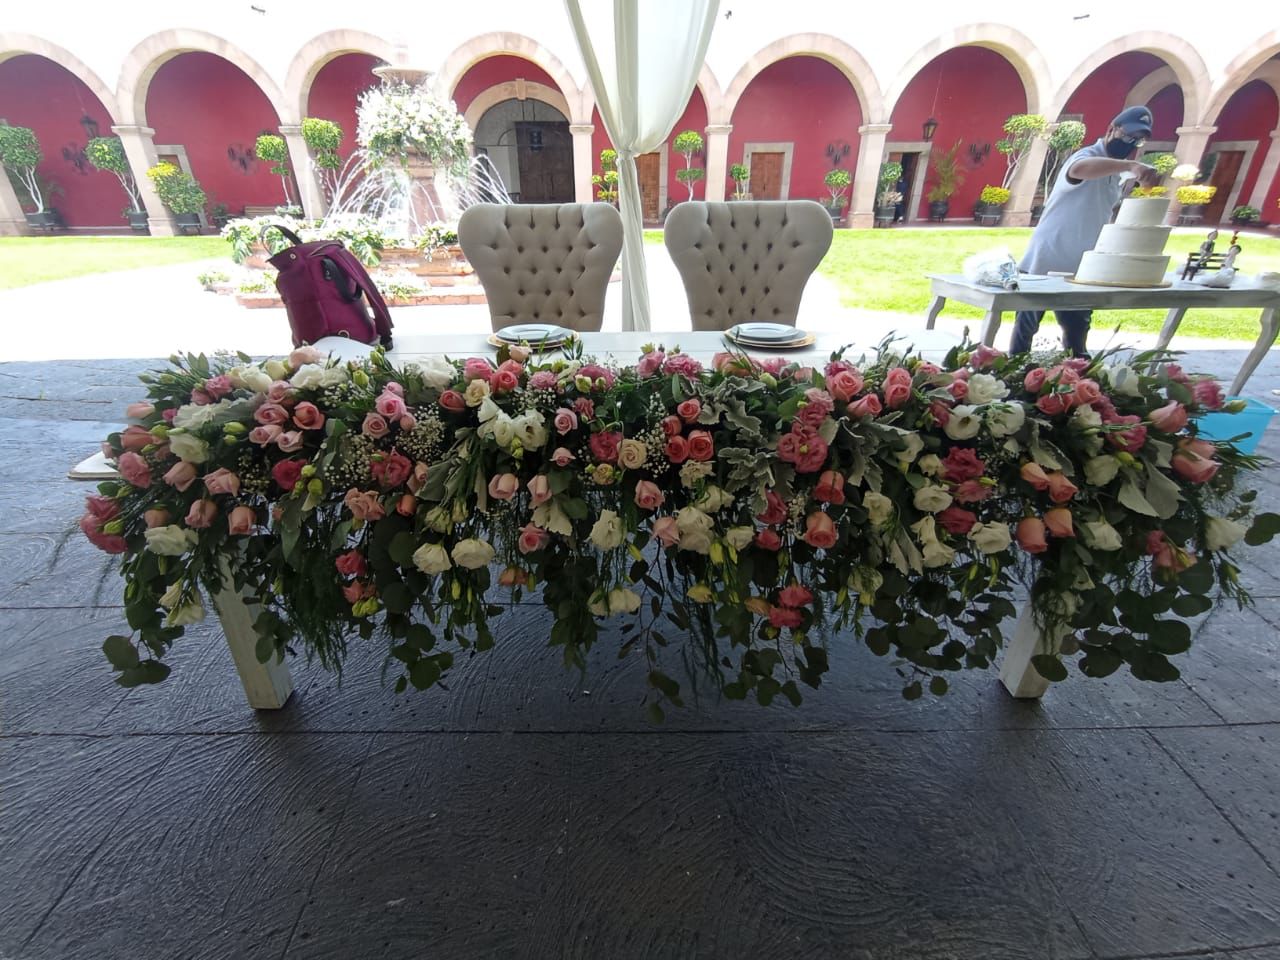 Se incrementó la demanda de organización de eventos para bodas - Capital  Estado de México